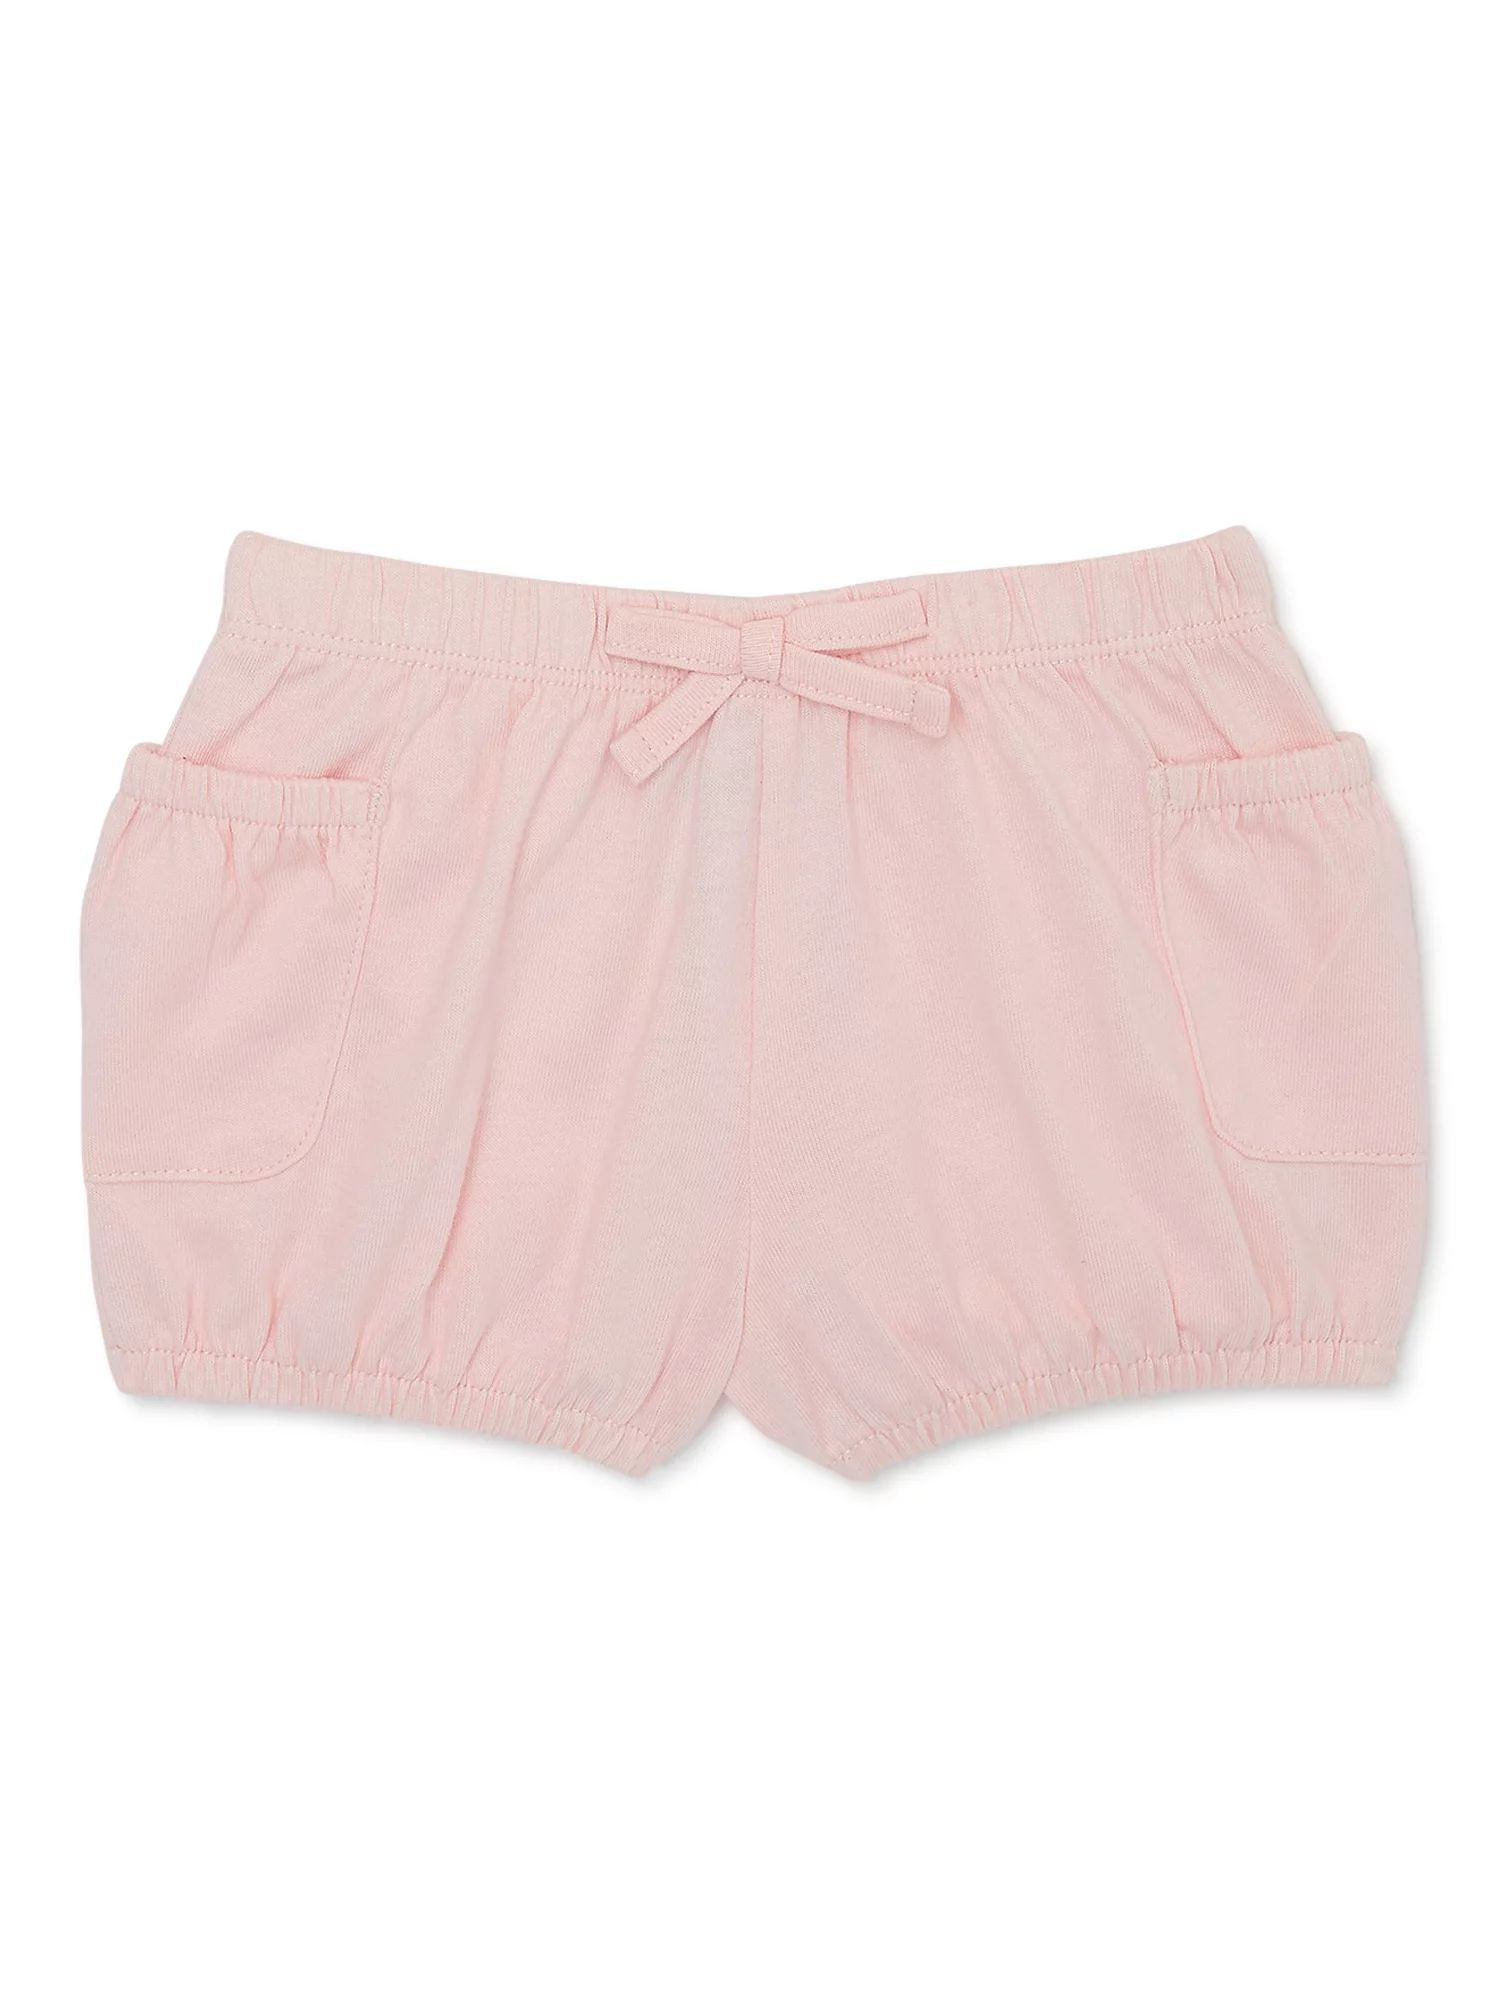 Garanimals Baby Girls Bubble Shorts, Sizes 0-24M | Walmart (US)